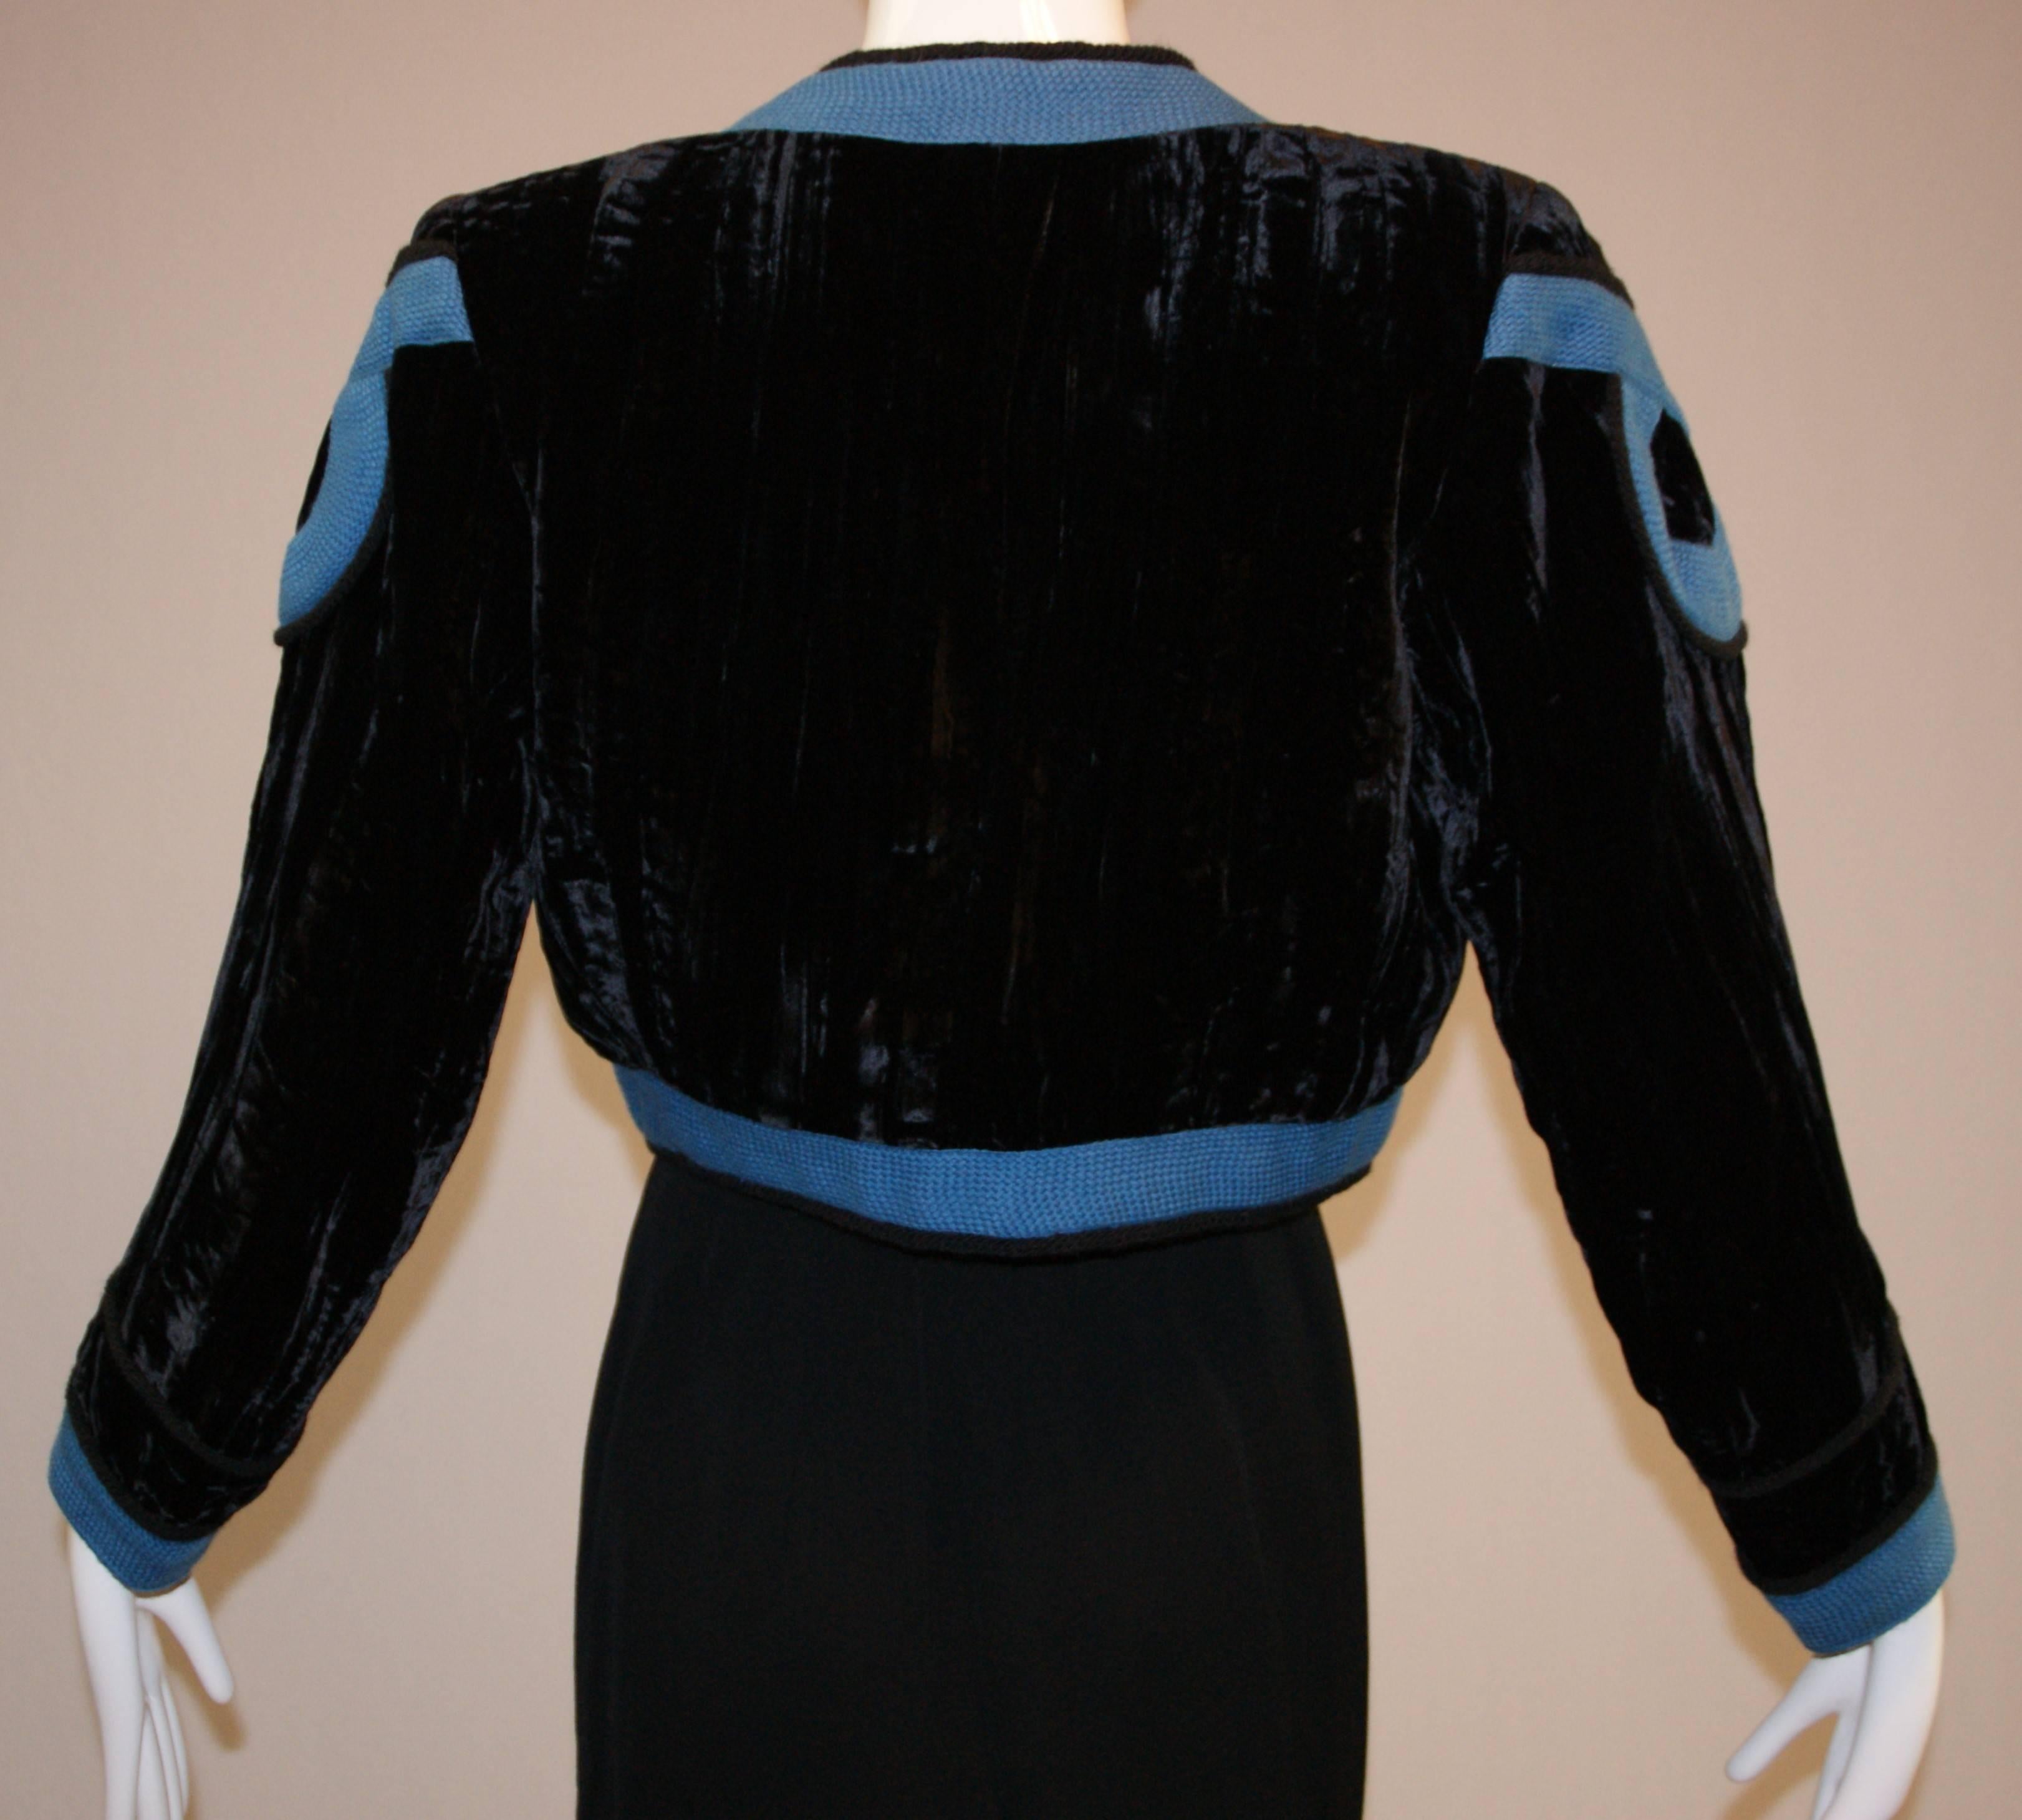 S/S 1991 Yves Saint Laurent Woven Rope Trim Toreador Crop Jacket Skirt Suit 1